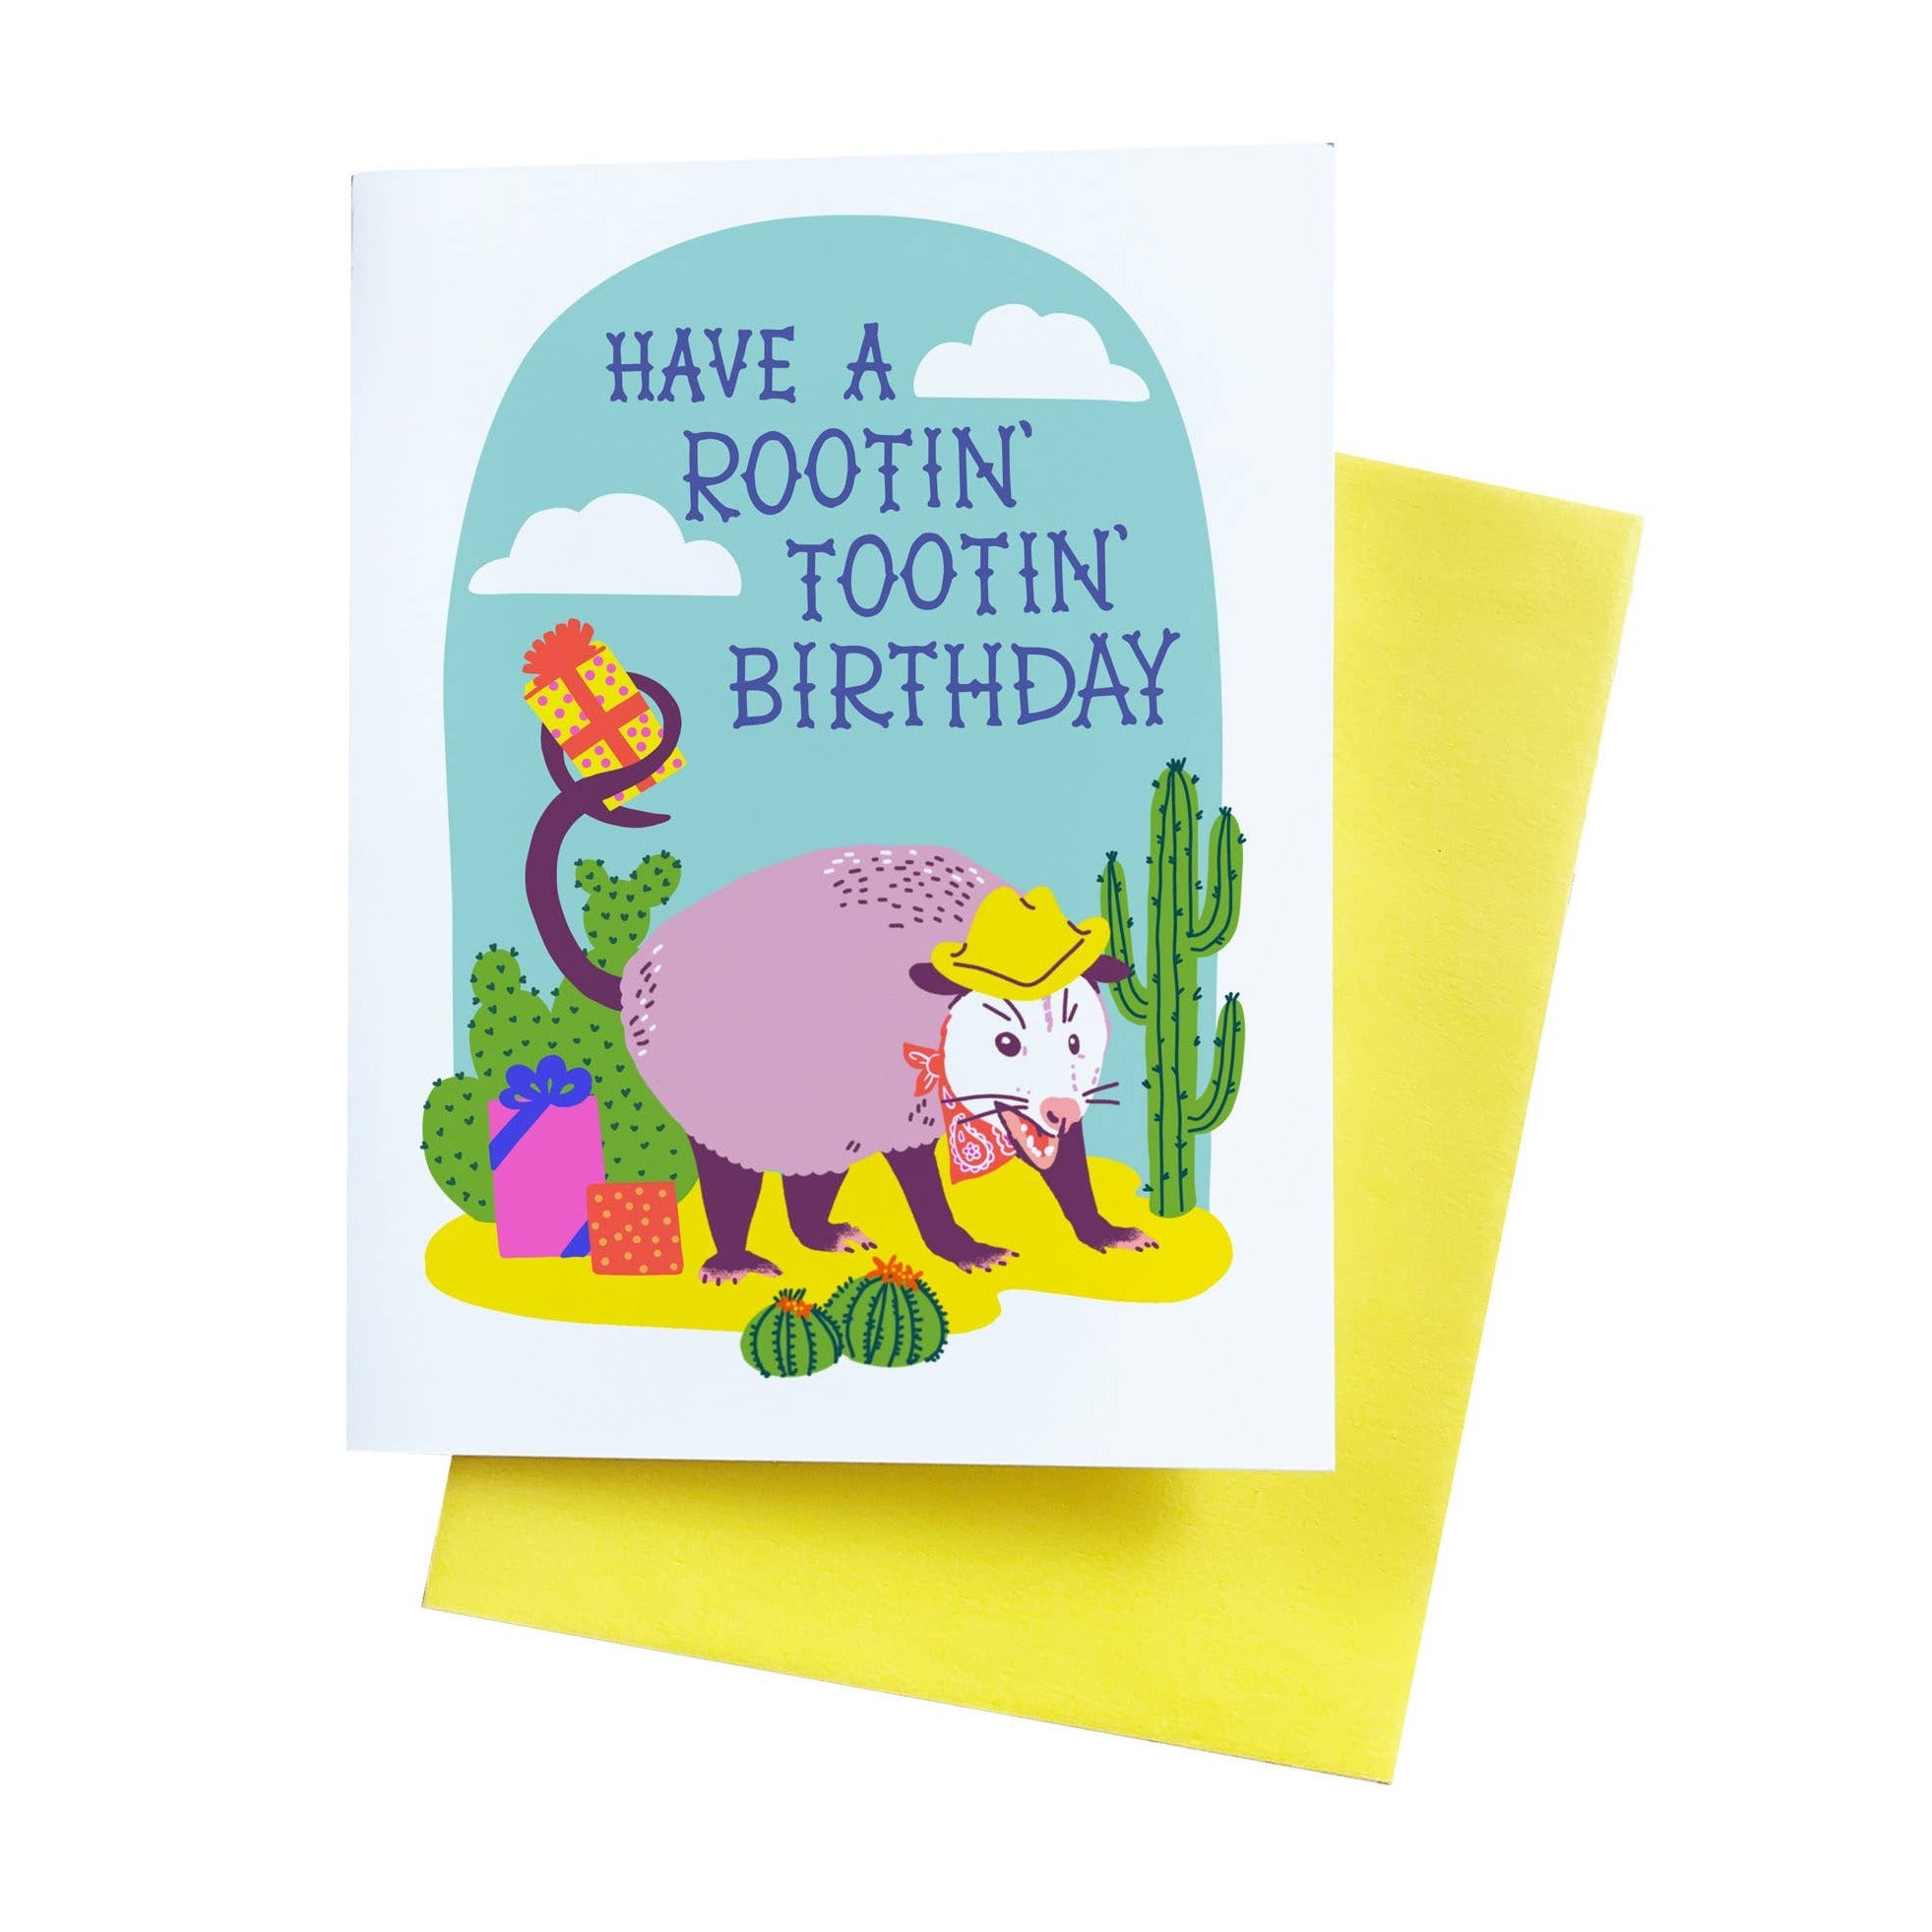 Rootin'Tootin' Birthday Greeting Card